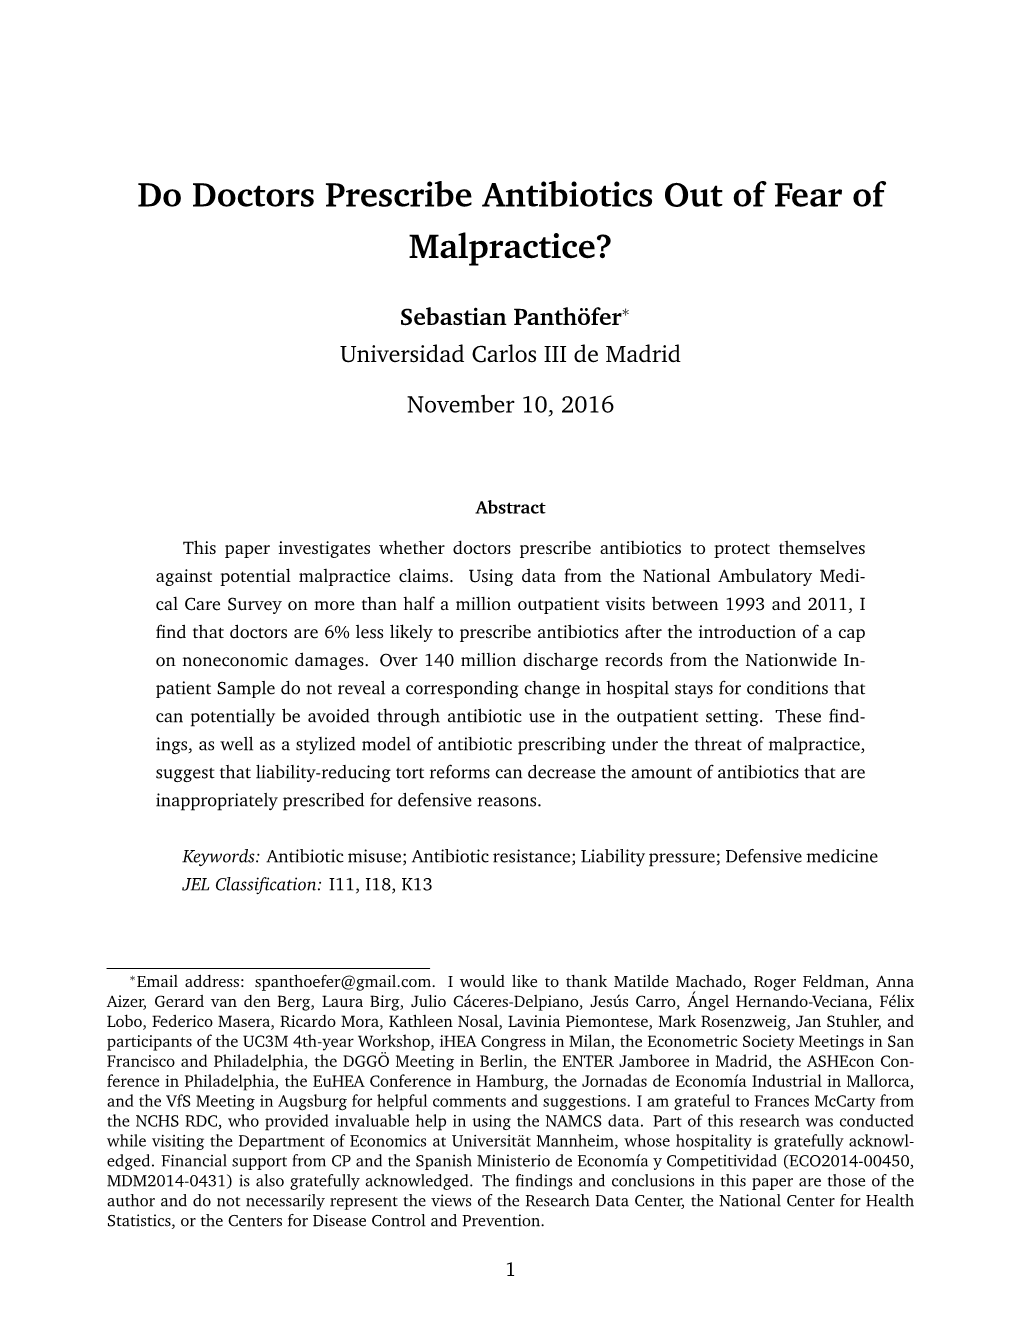 Do Doctors Prescribe Antibiotics out of Fear of Malpractice?